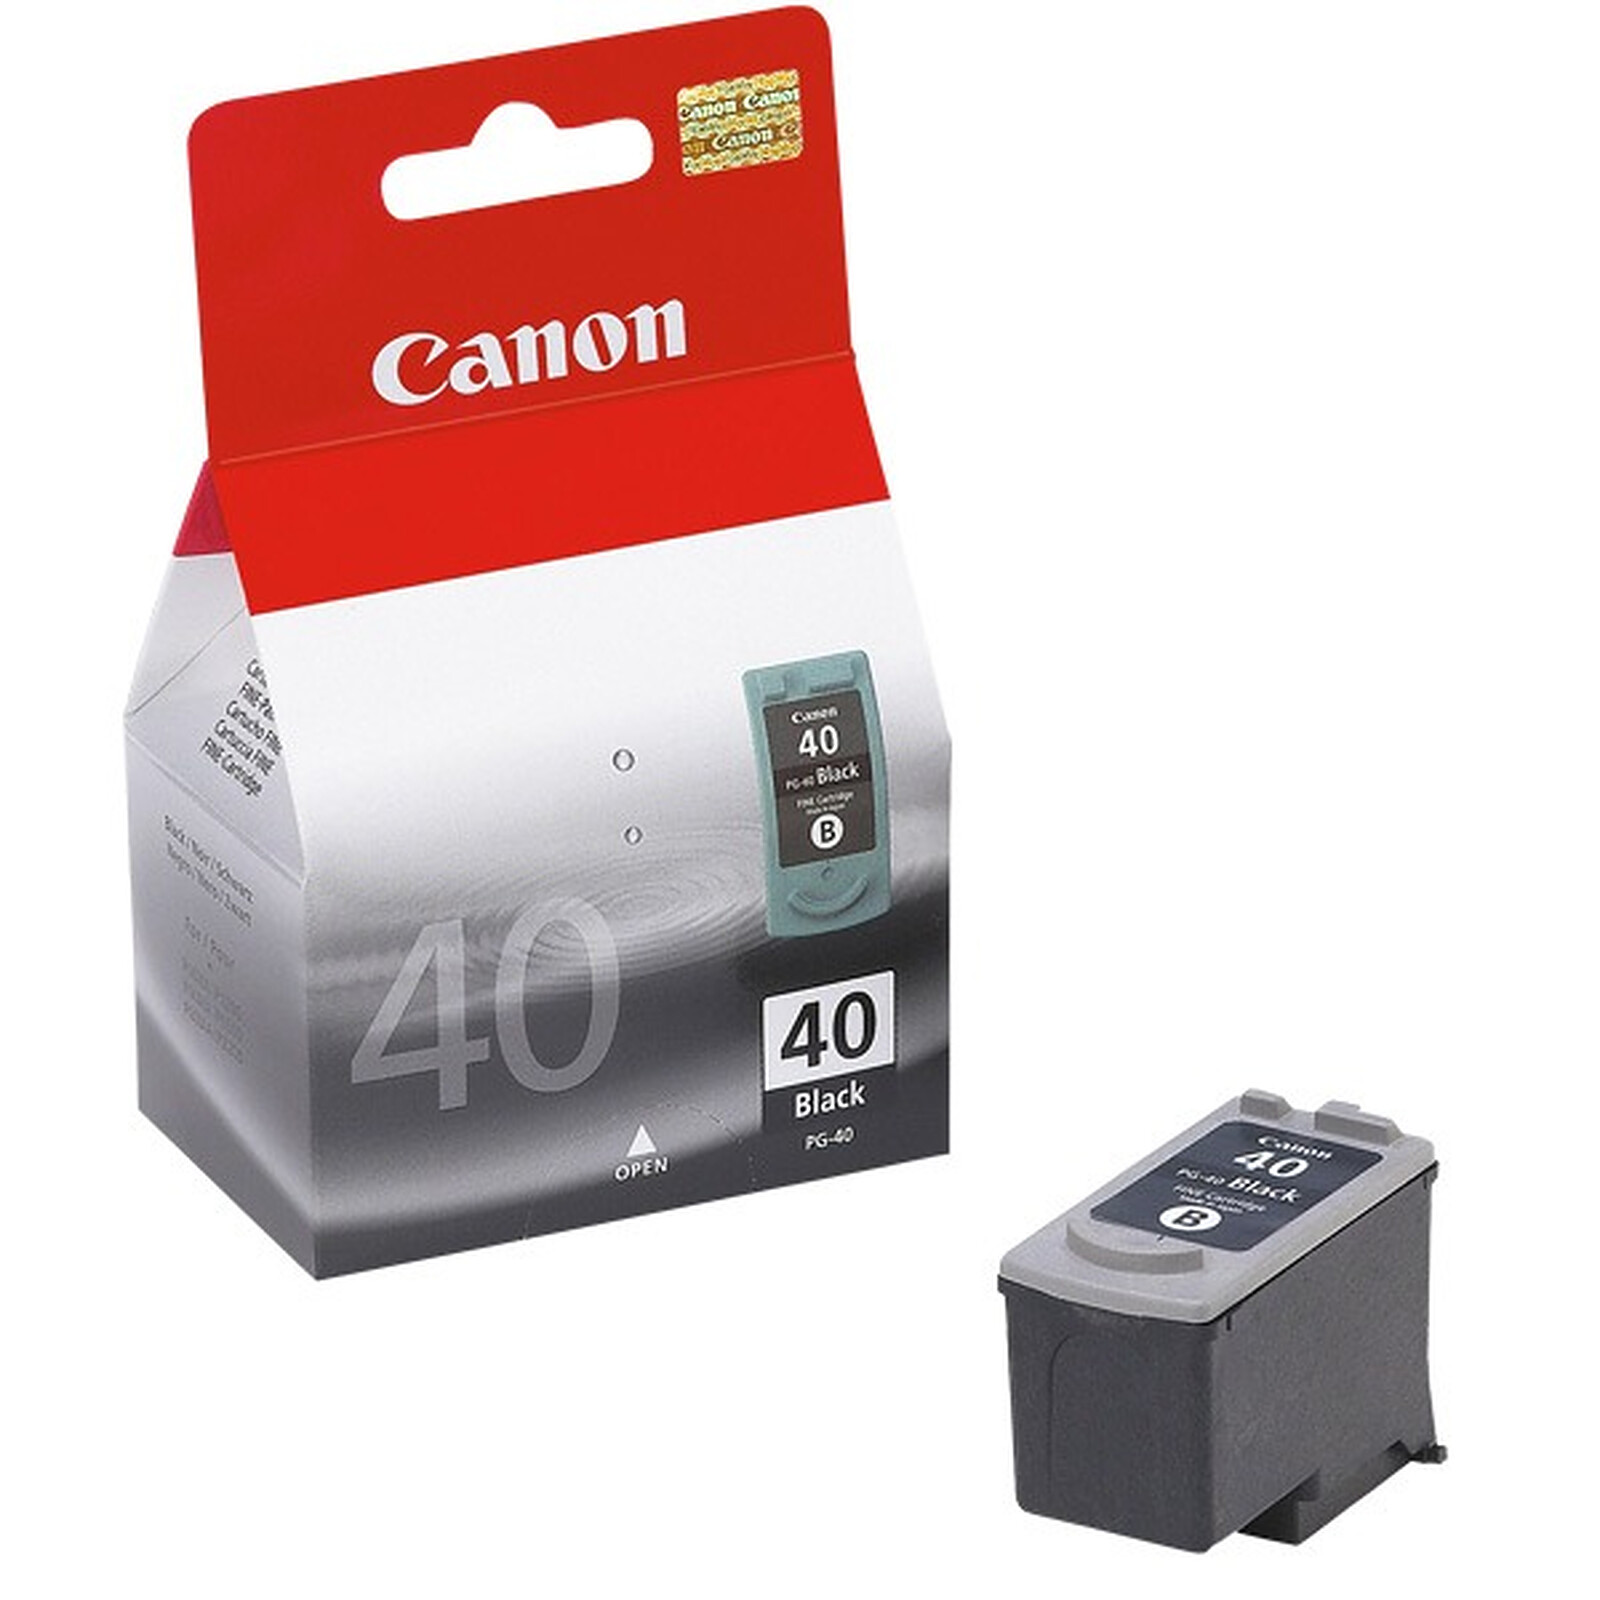 Canon CLI-581 BK/C/M/Y + papier photo Canon - Cartouche imprimante - LDLC